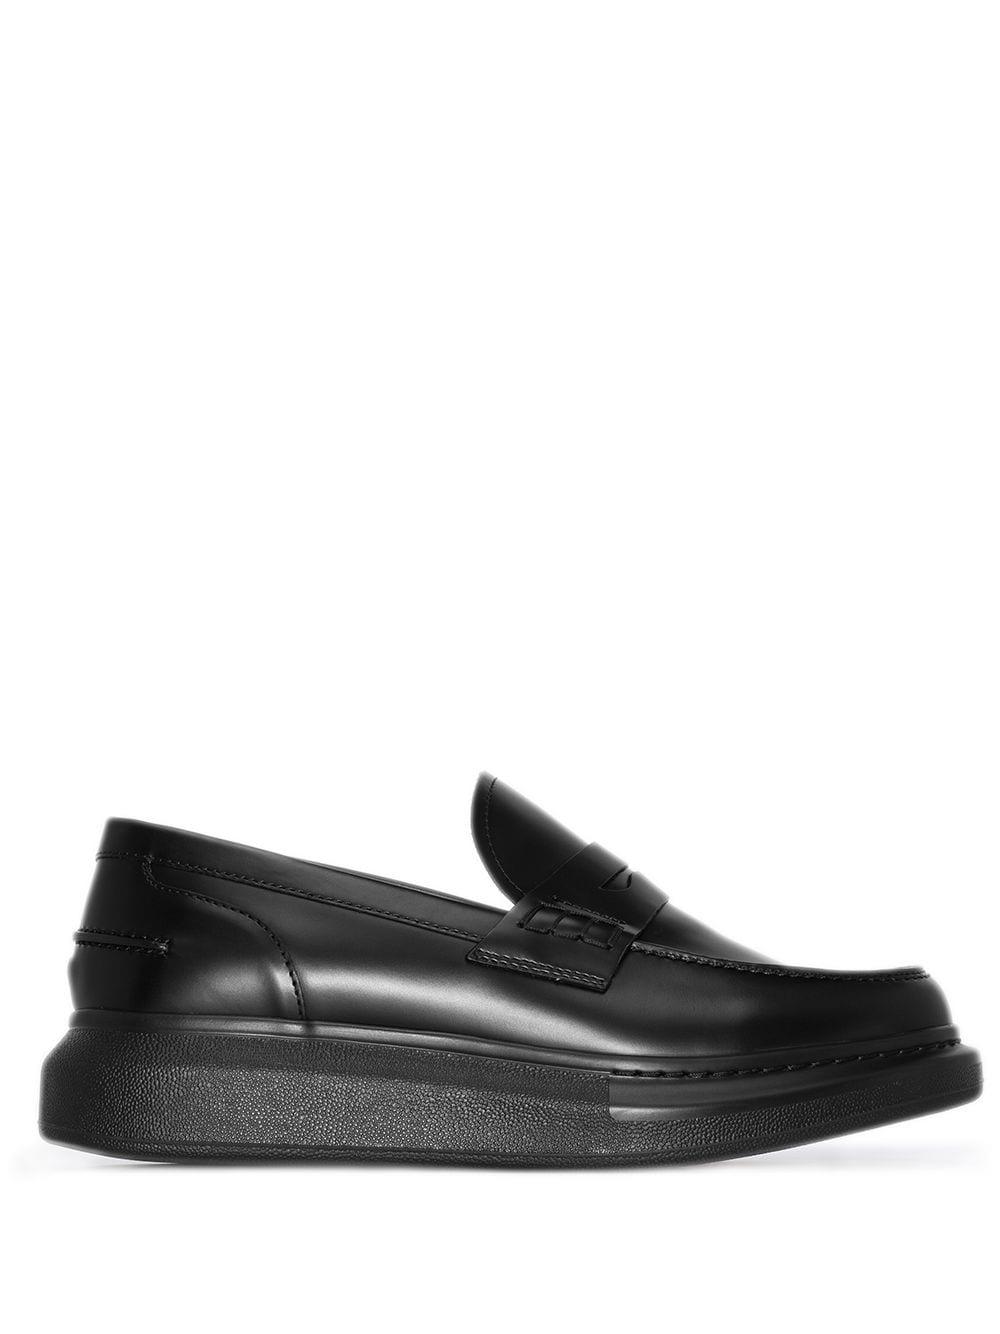 Alexander McQueen Leather Platform Loafers in Black - Lyst